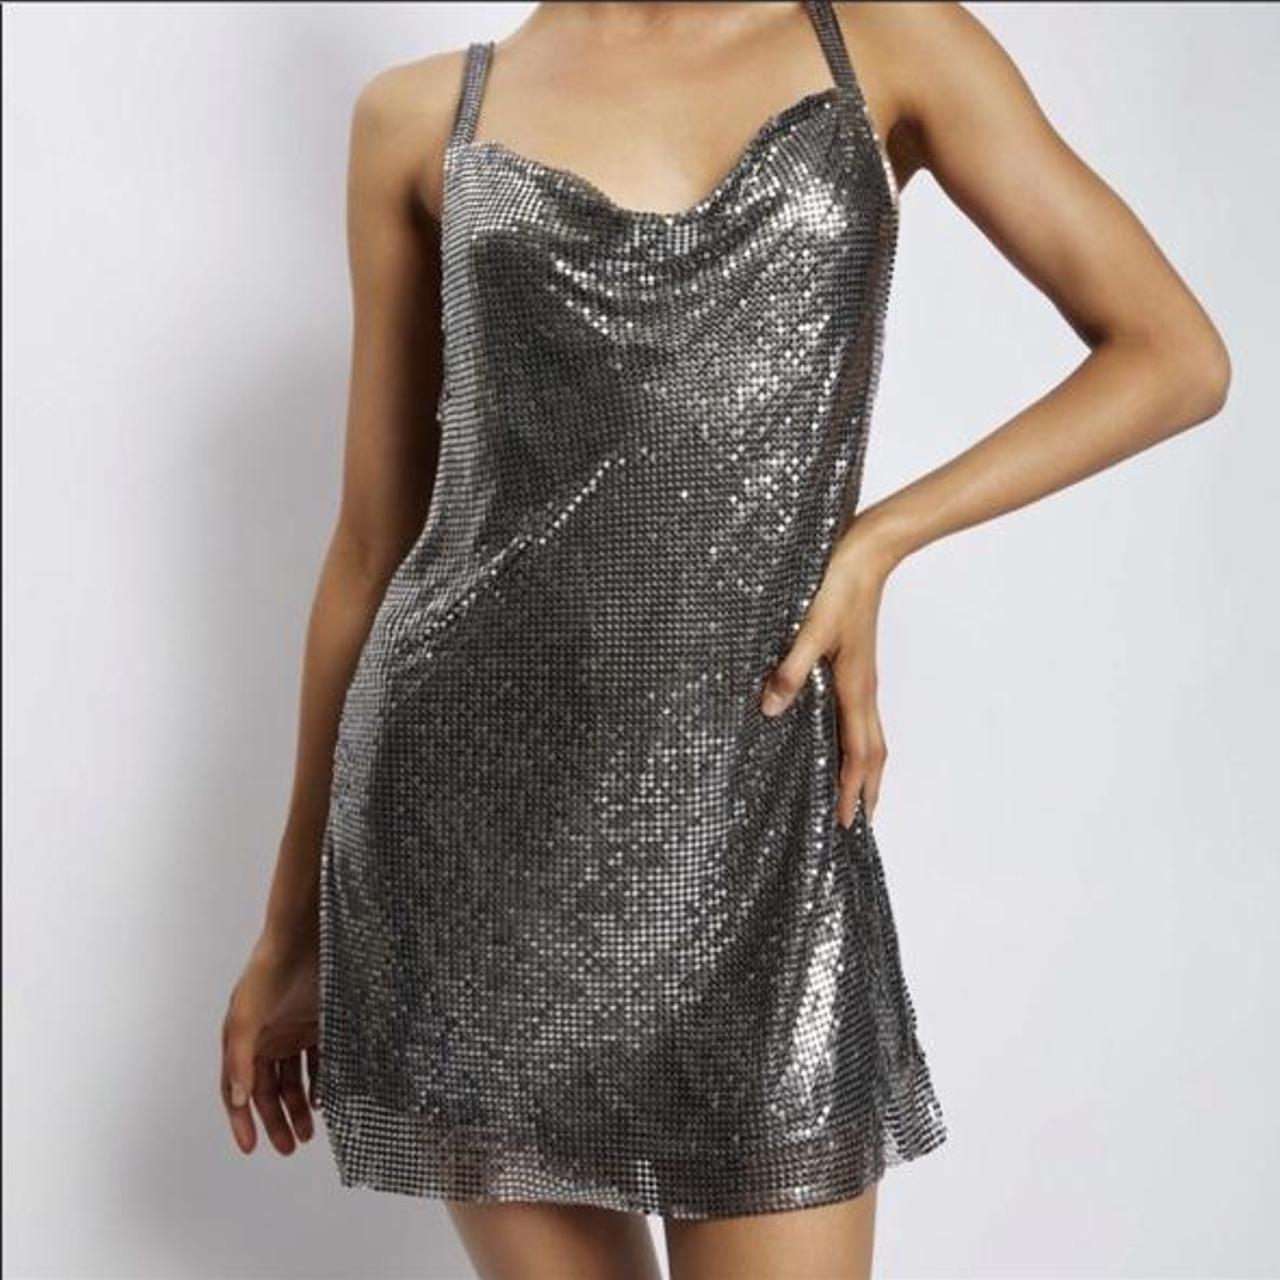 MESHKI chain mail mesh dress. Brand new ...